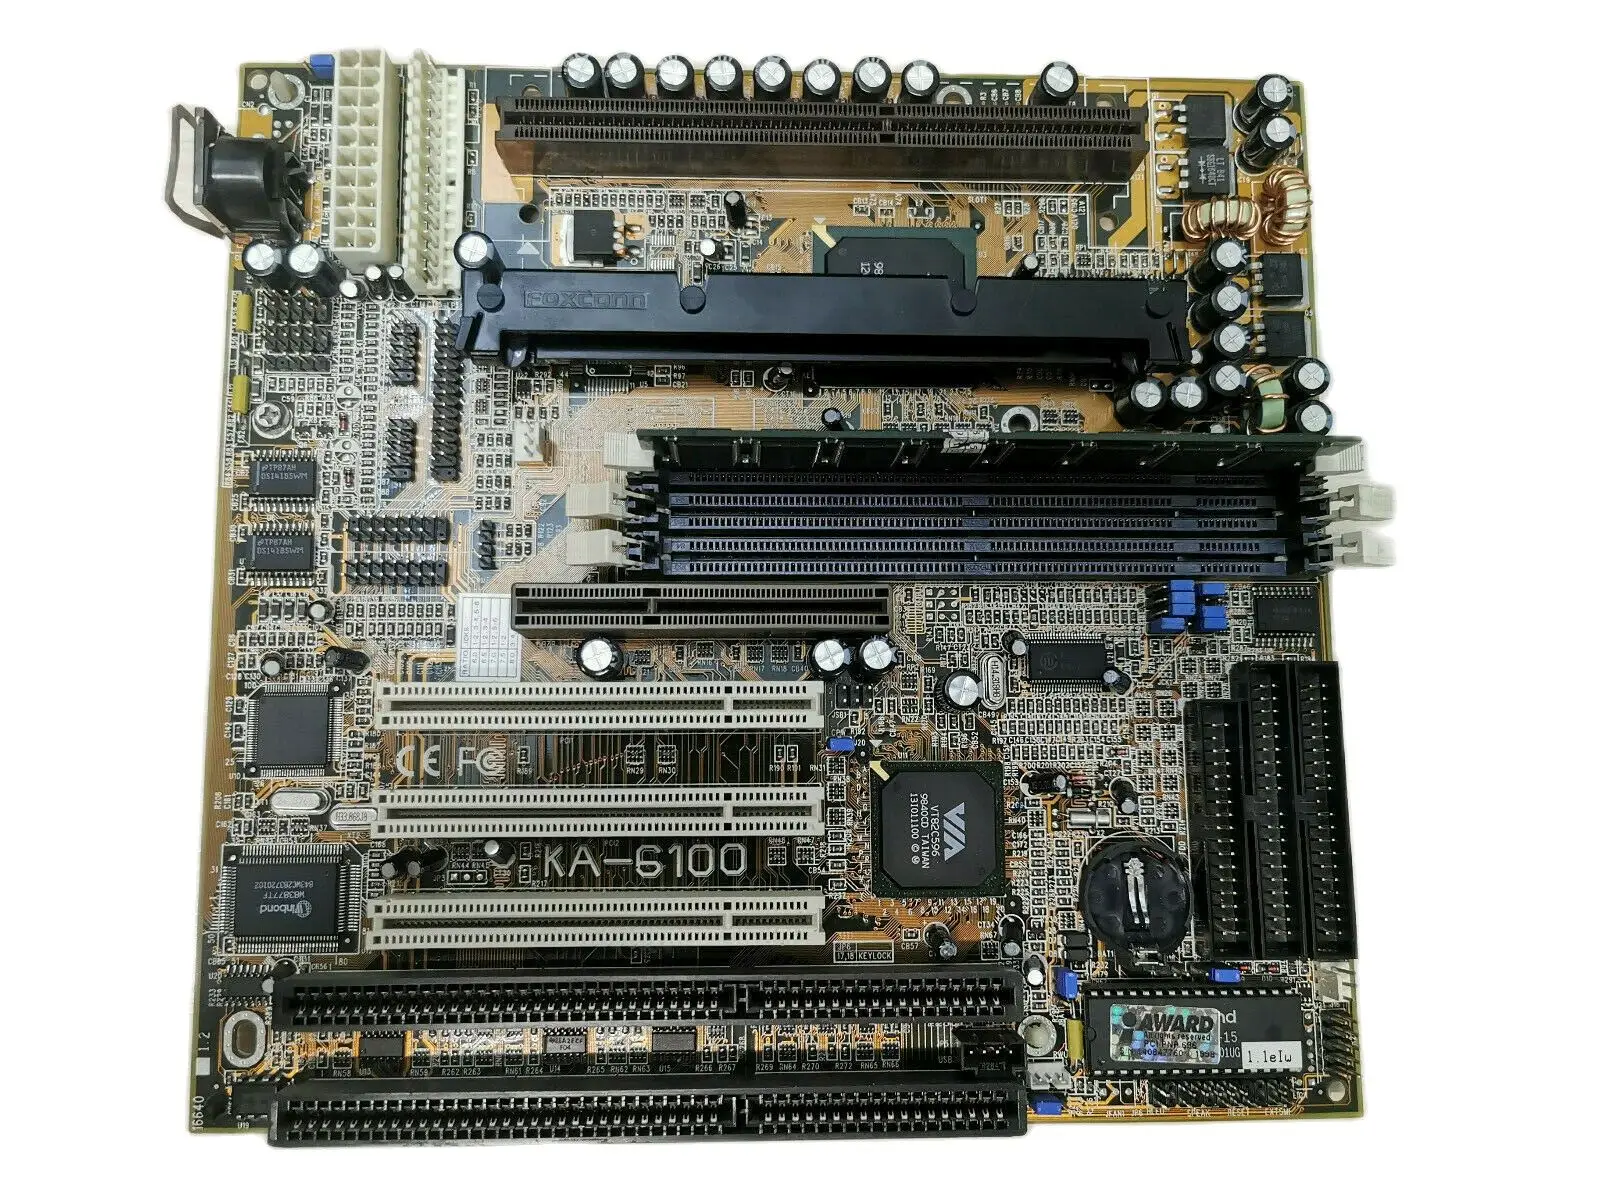 Материнская плата FIC KA-6100 Slot 1 Apollo Pro AT Pentium II | Компьютеры и офис